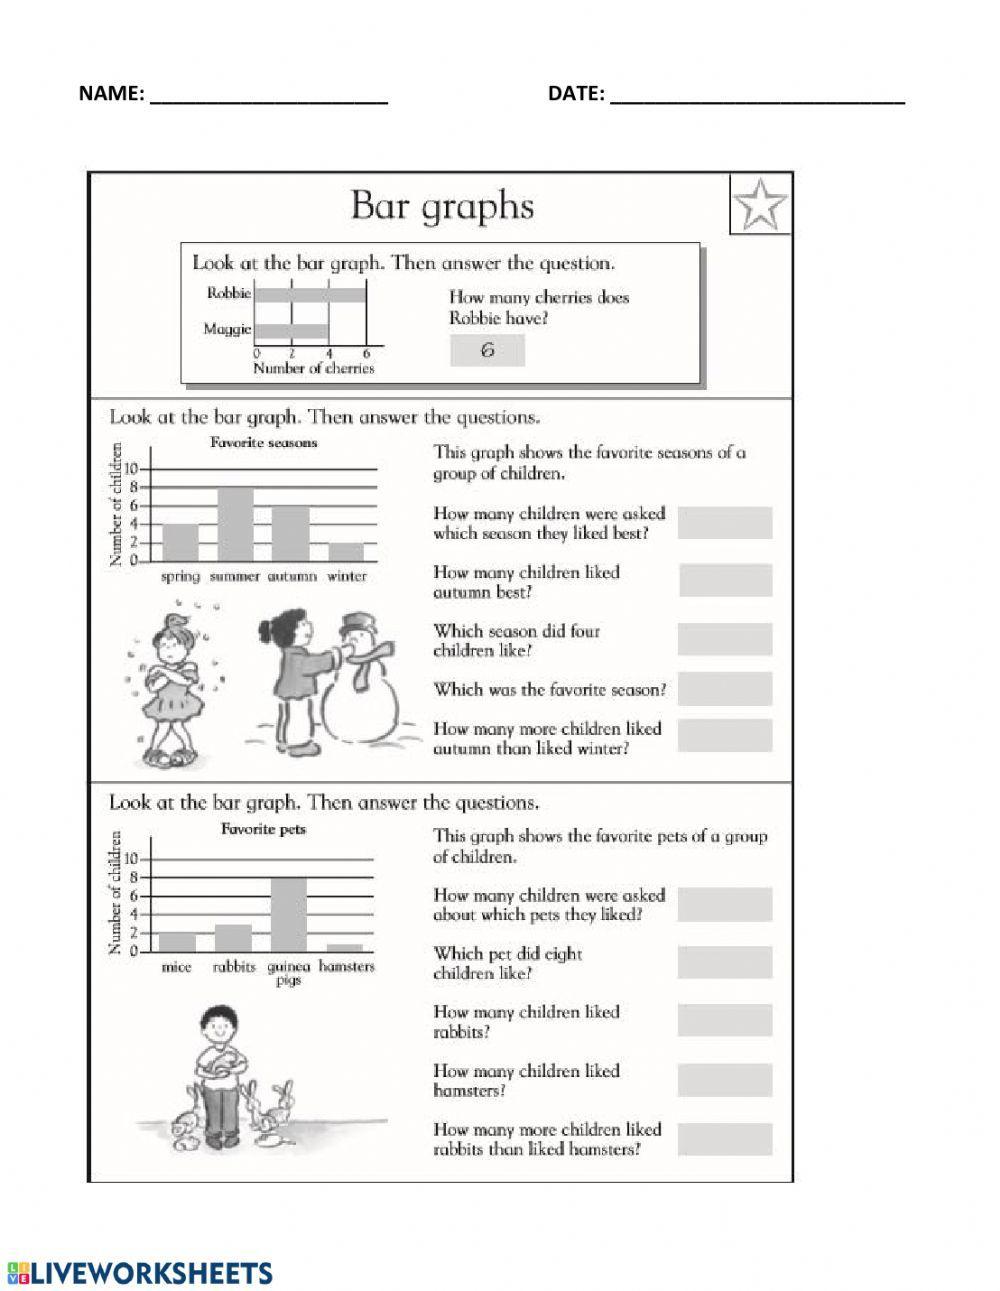 Reading Bar Graphs